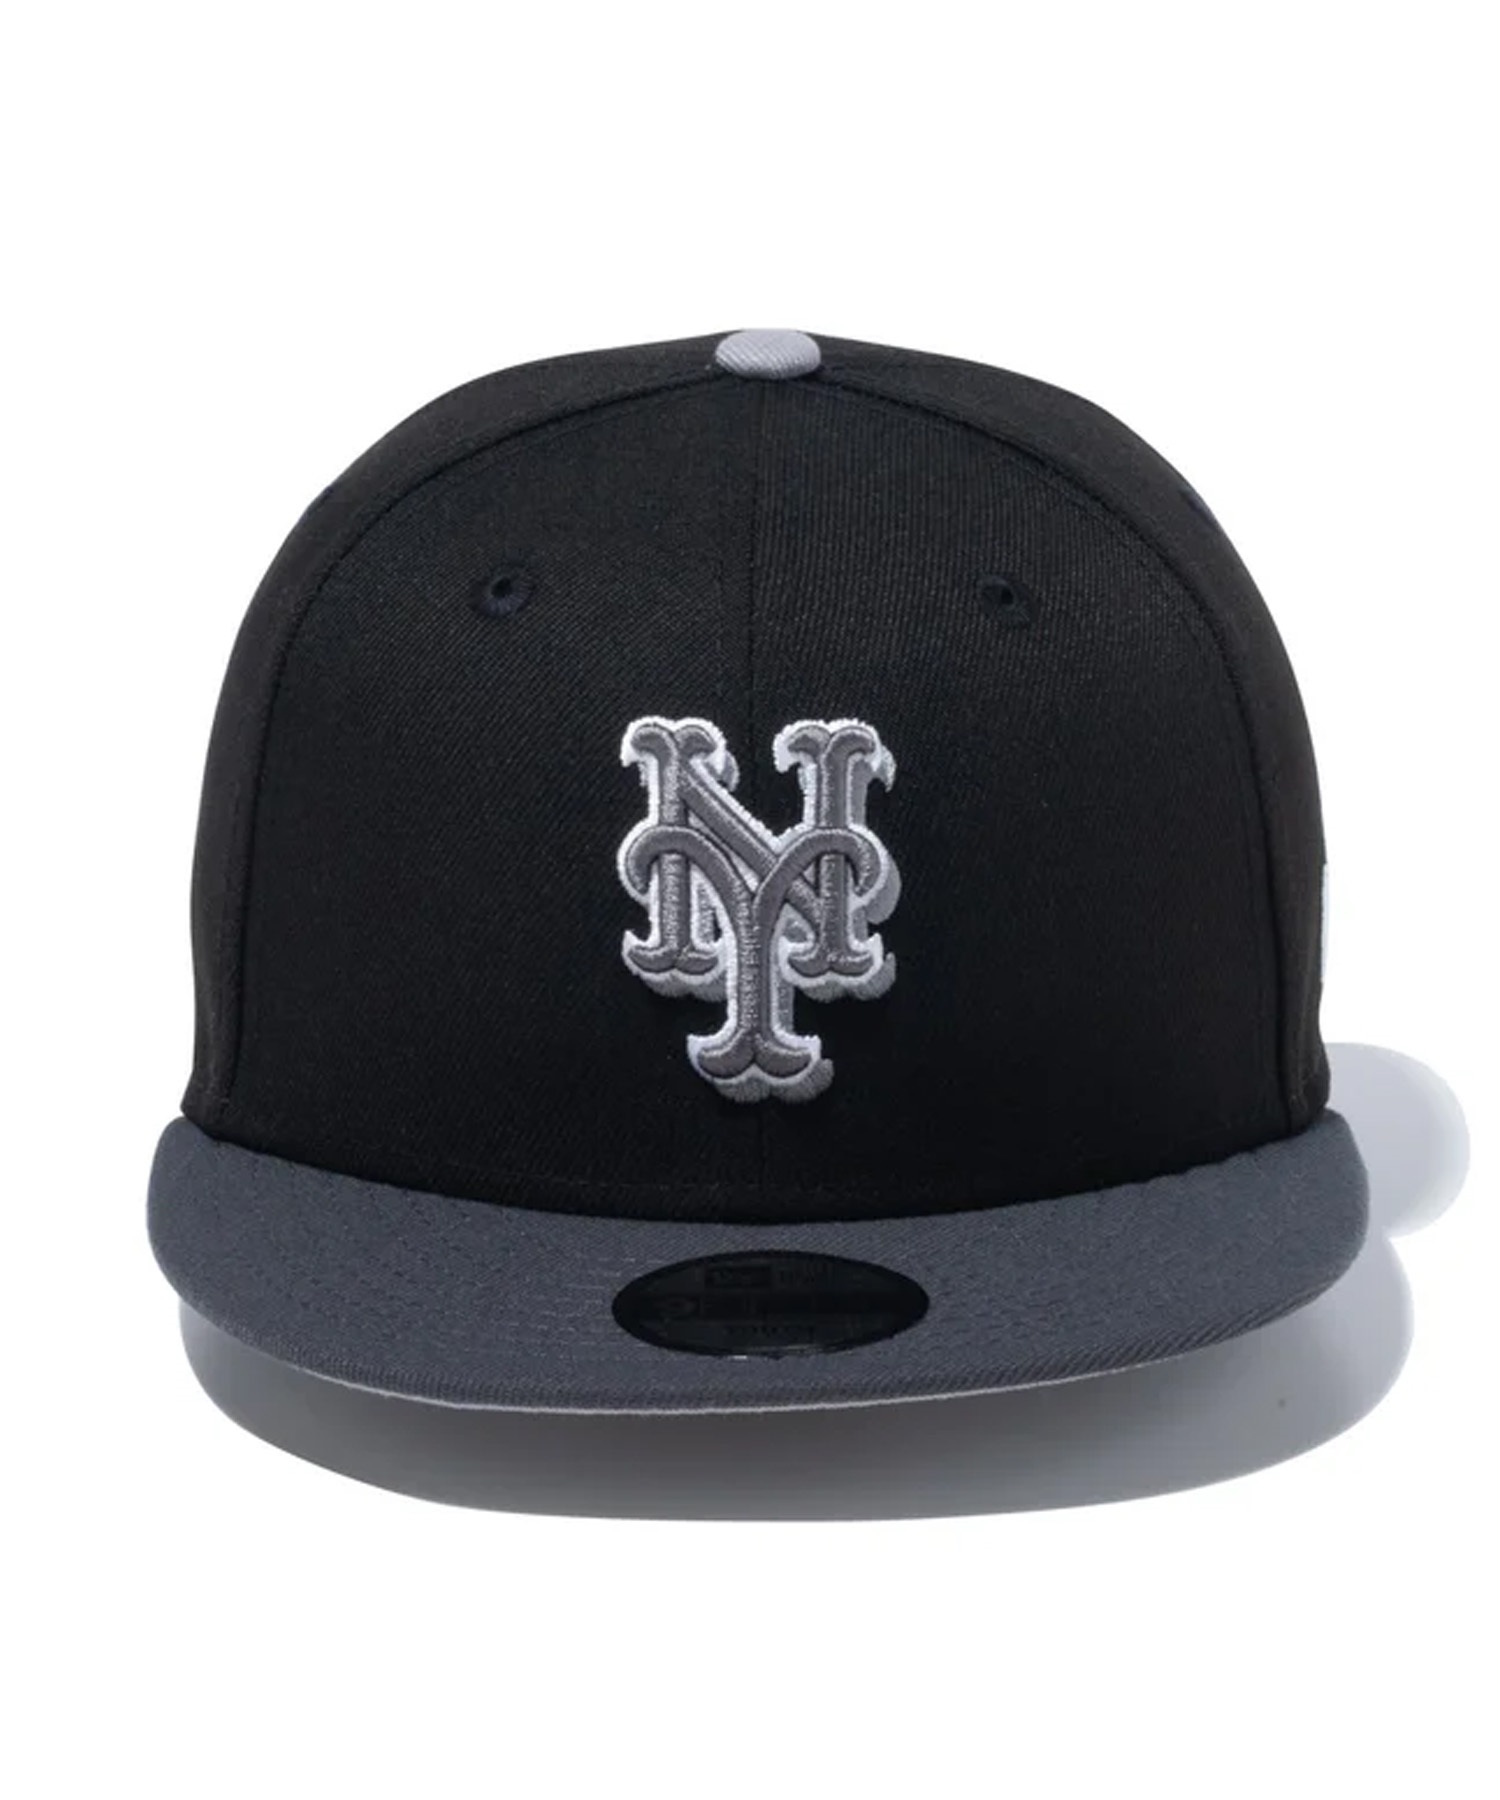 NEW ERA ニューエラ Youth 9FIFTY SHADOW ニューヨーク・メッツ ブラック ダークグラファイトバイザー キッズ キャップ 帽子 14111888(ONECOLOR-YTH)